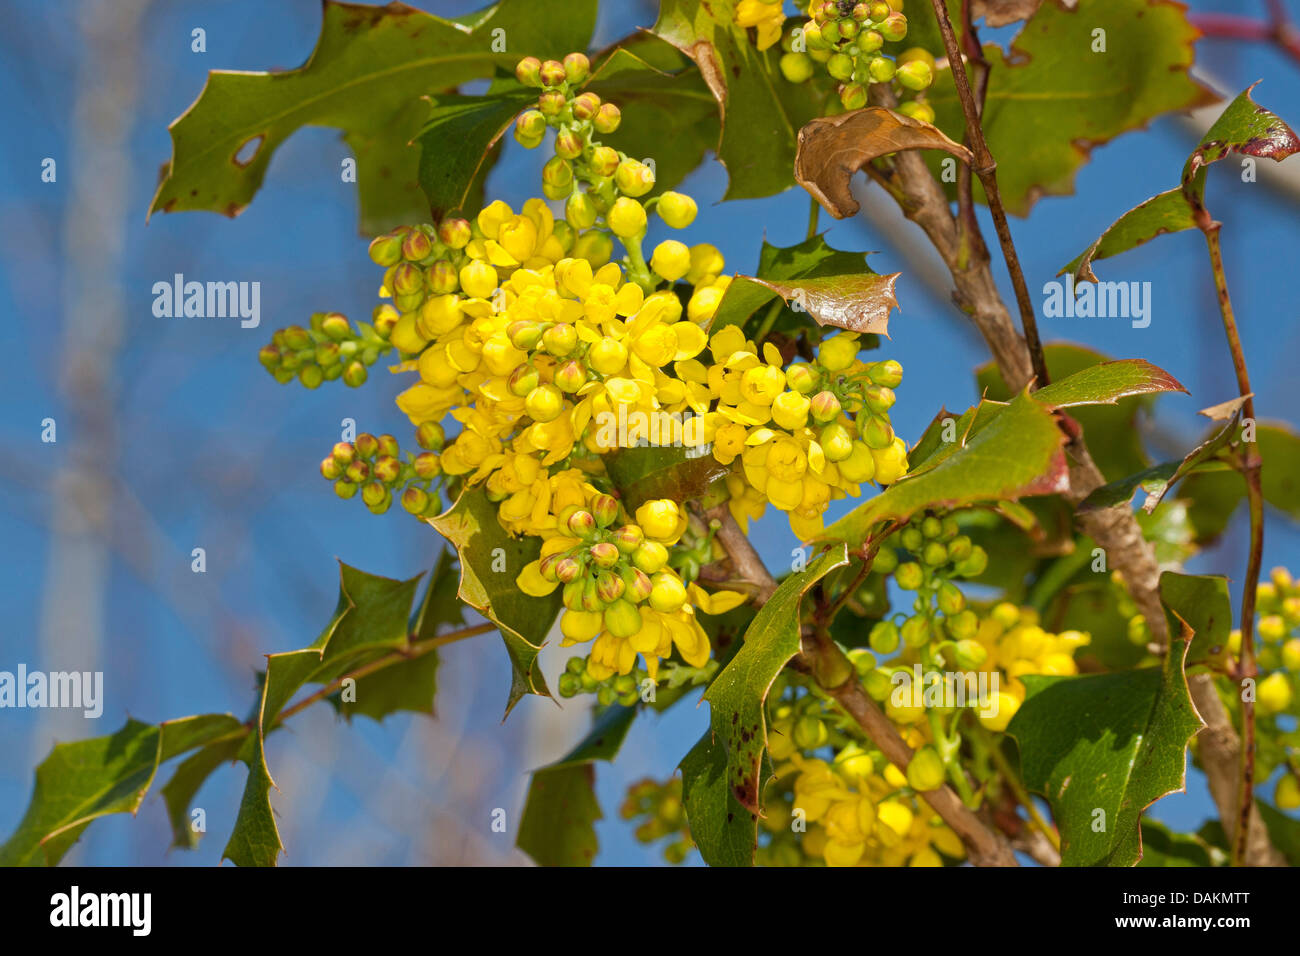 holly-leaf oregongrape, oregon-grape, shining oregongrape, tall oregongrape, mountain grape (Mahonia aquifolium), blooming branch, Germany Stock Photo